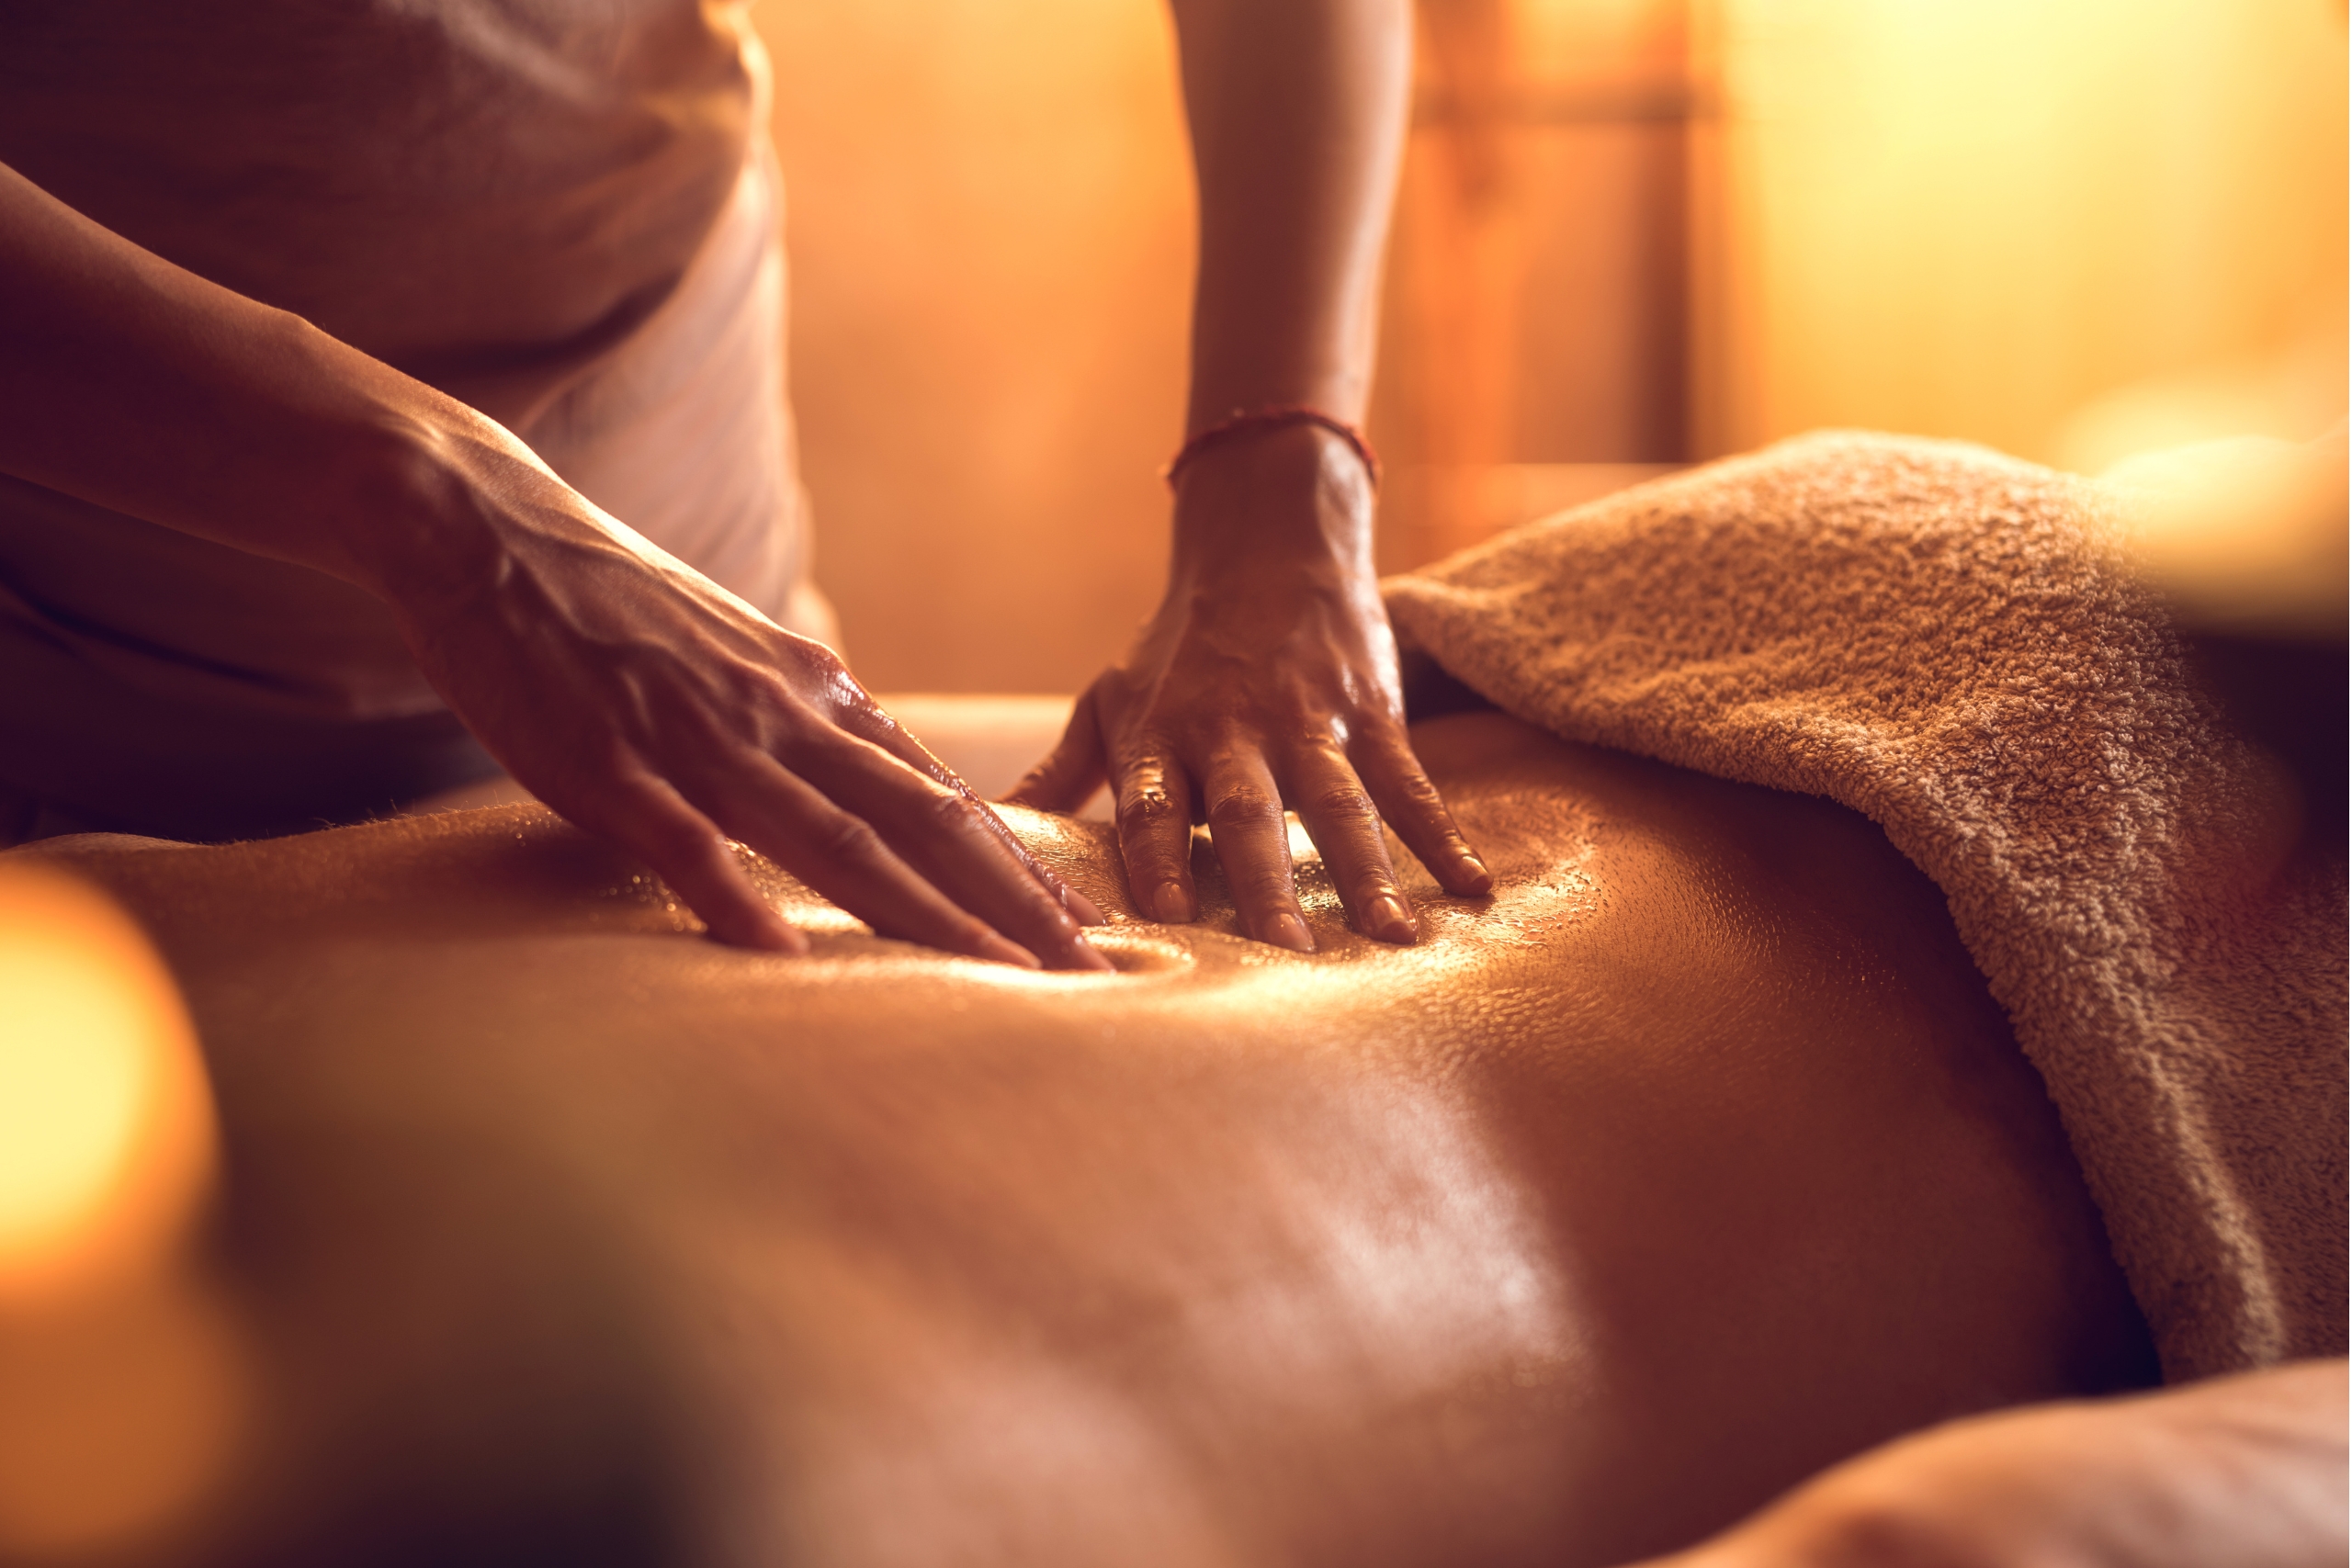 Unrecognizable massage therapist massaging man's back